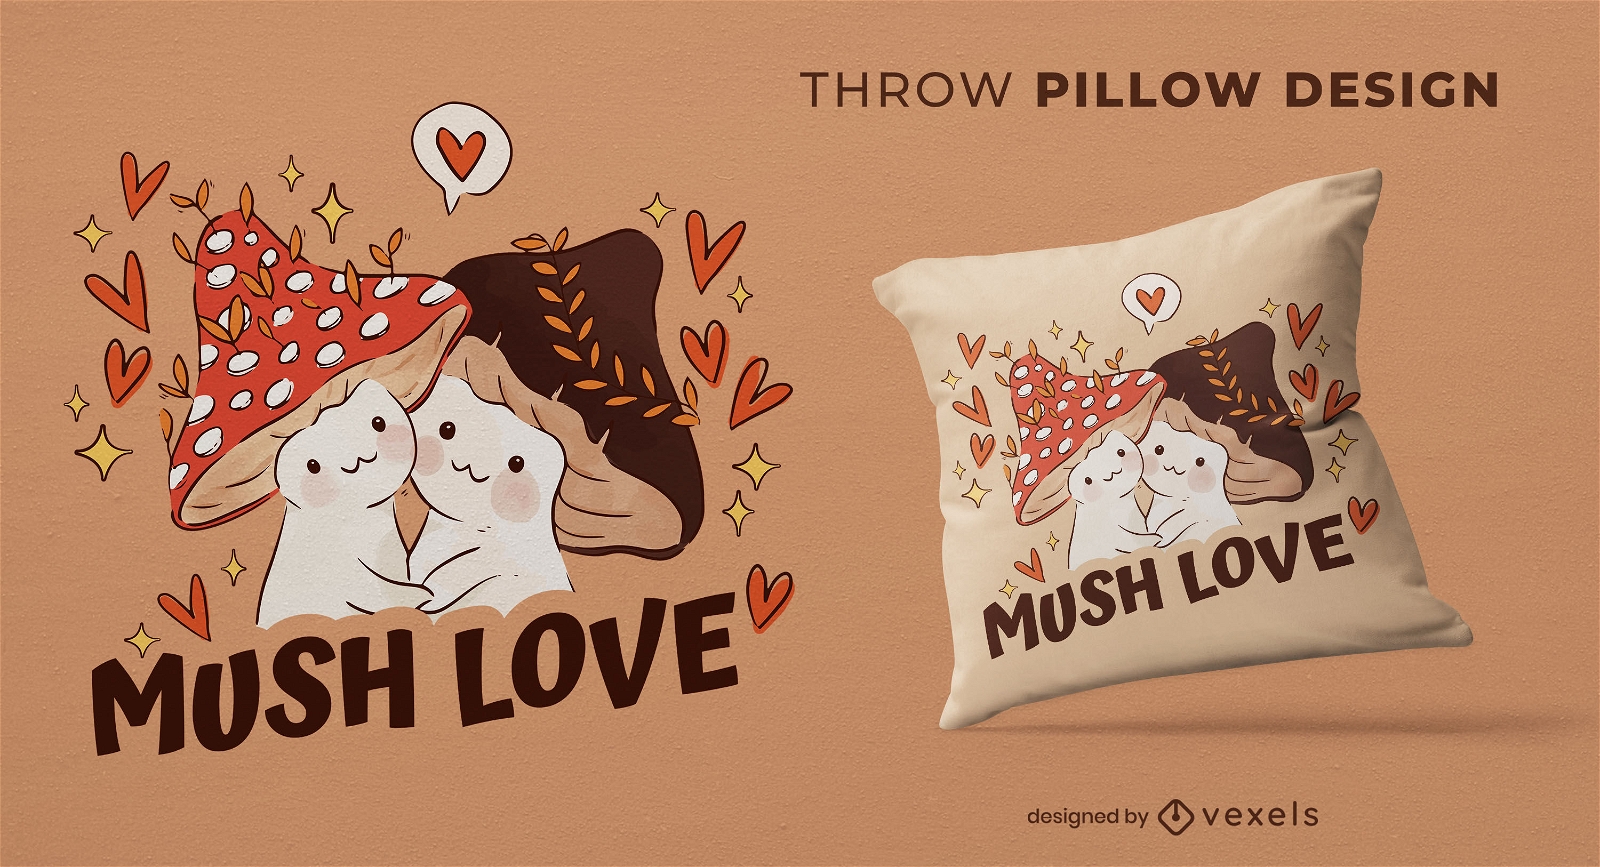 Mush love mushrooms throw pillow design